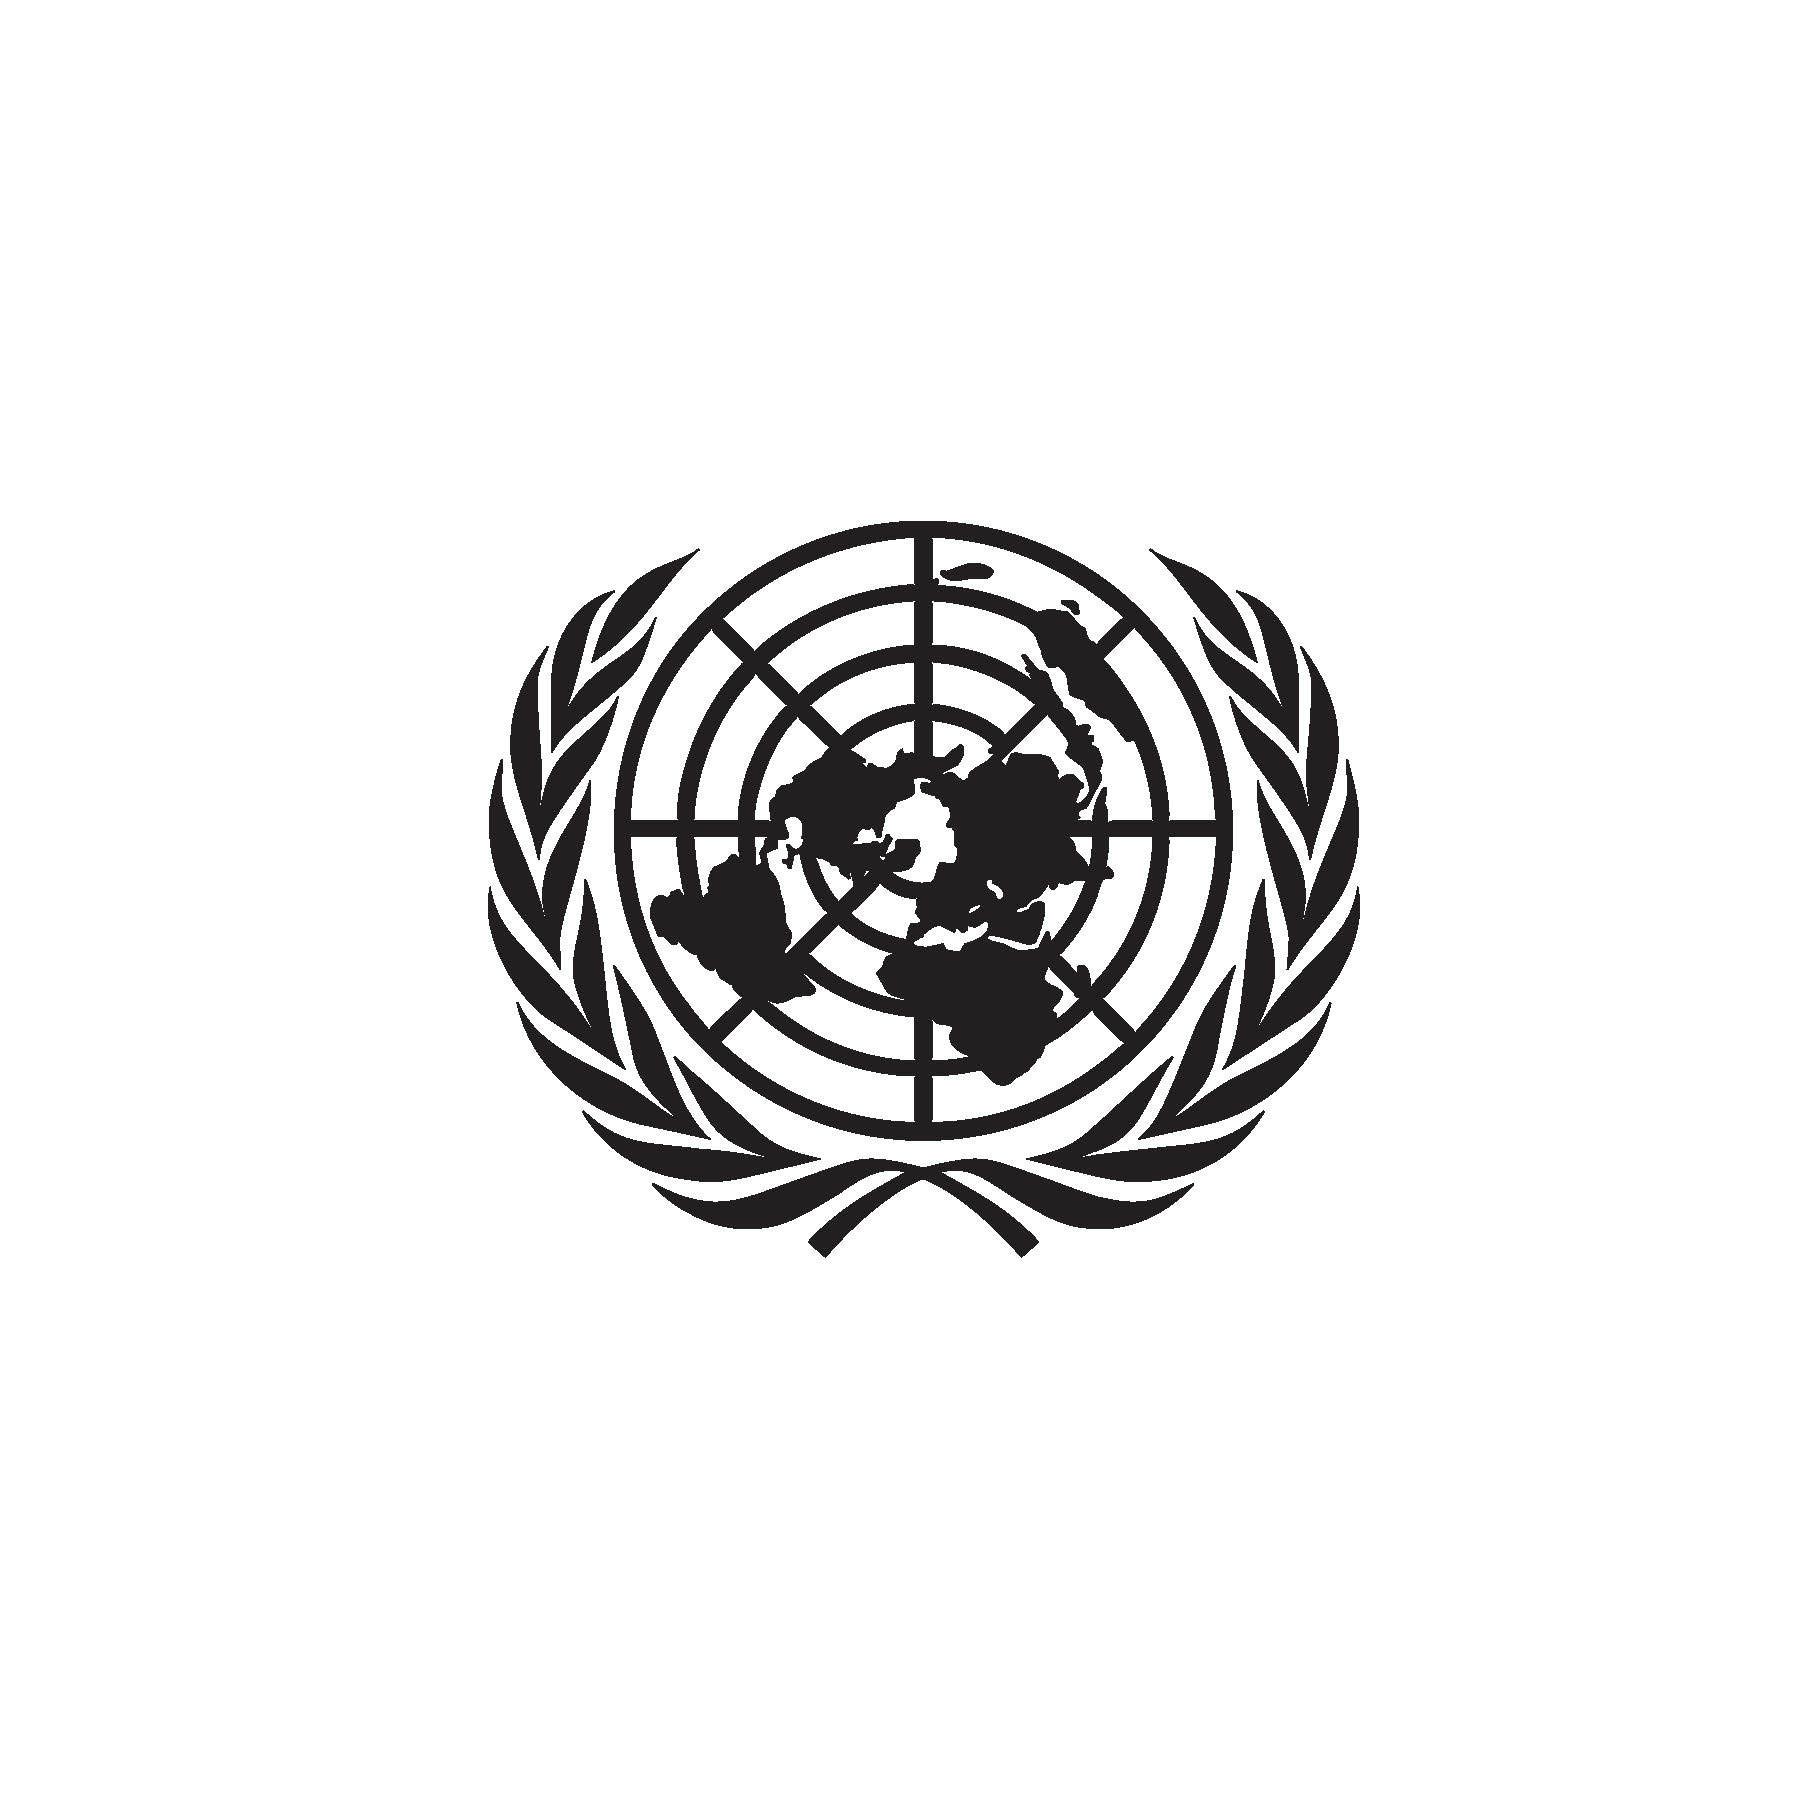 <p>United Nations emblem</p>
